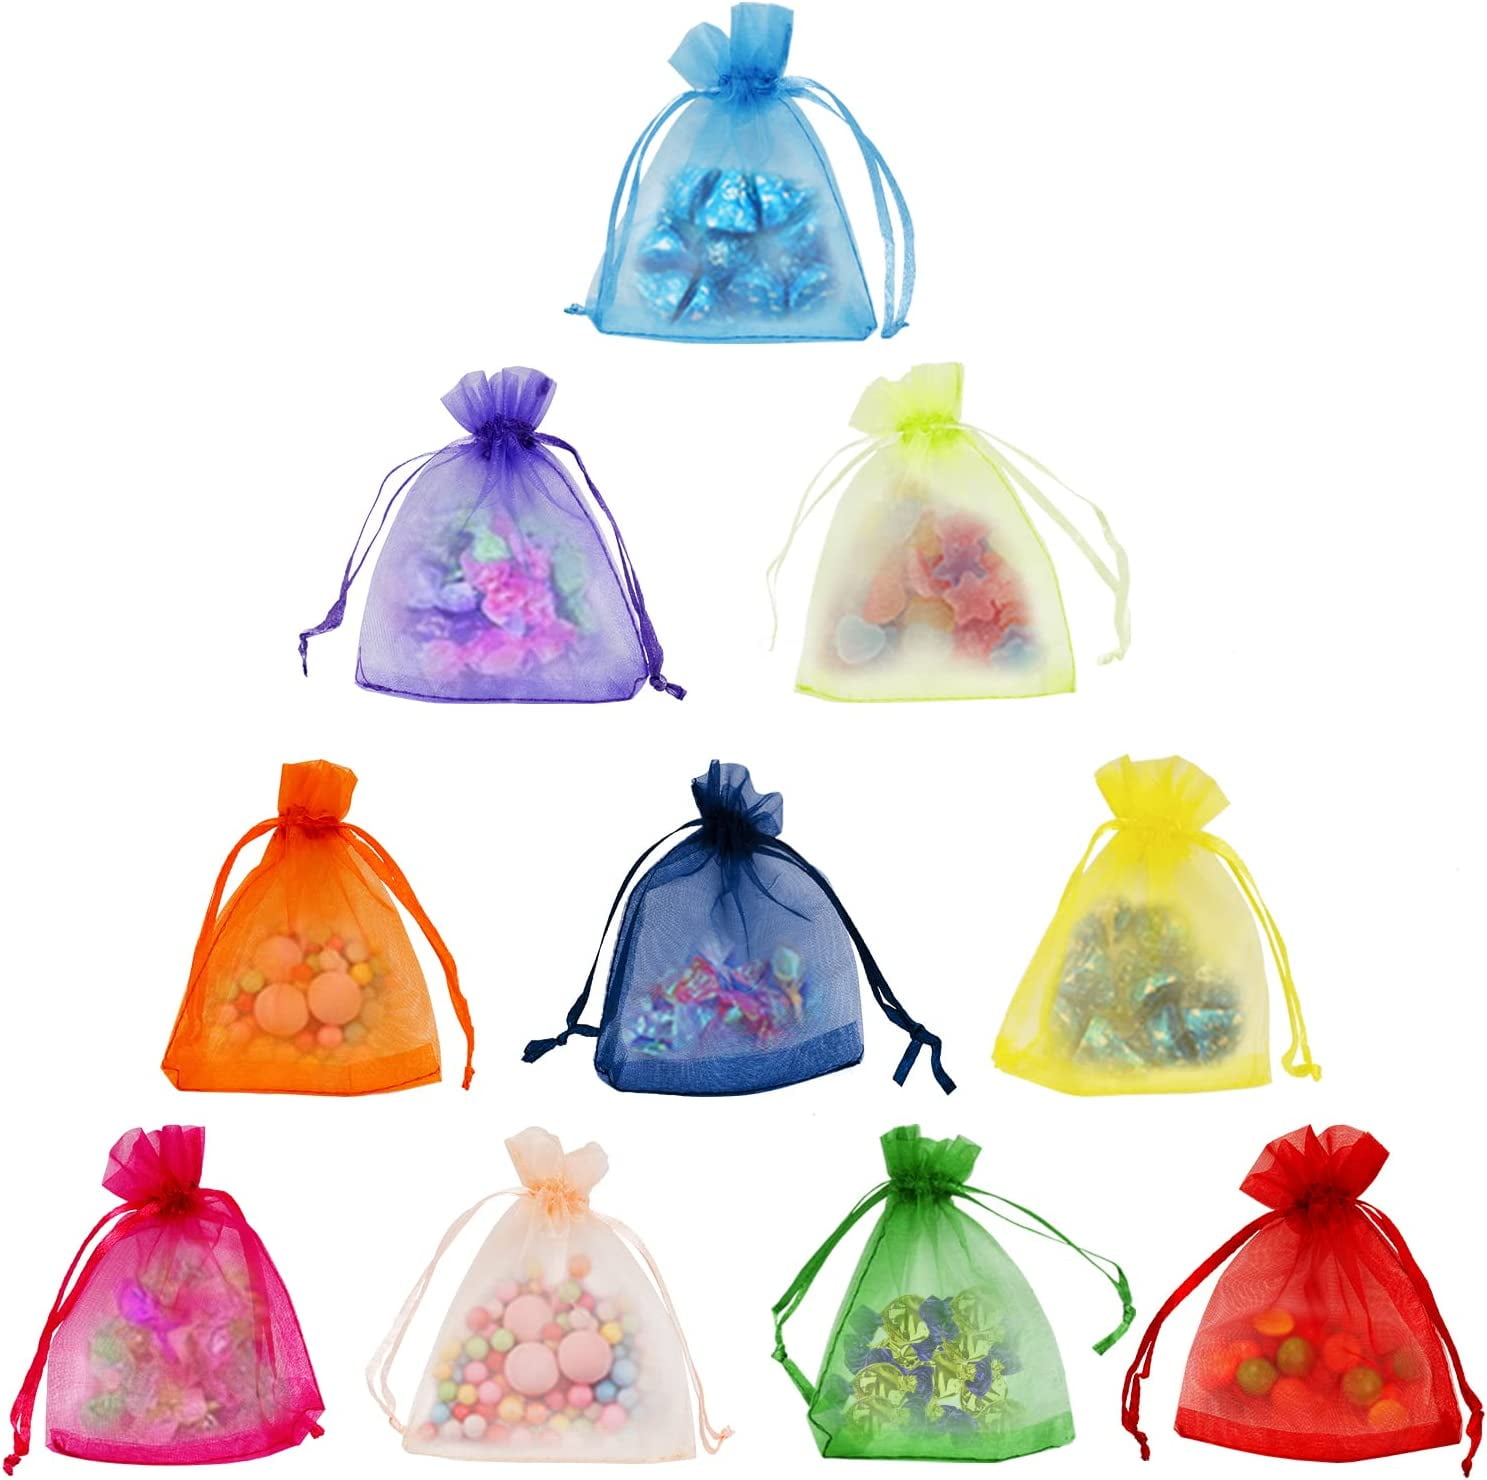  BRIGHTFUFU 100pcs Colorful Organza Bags Bracelet Bags